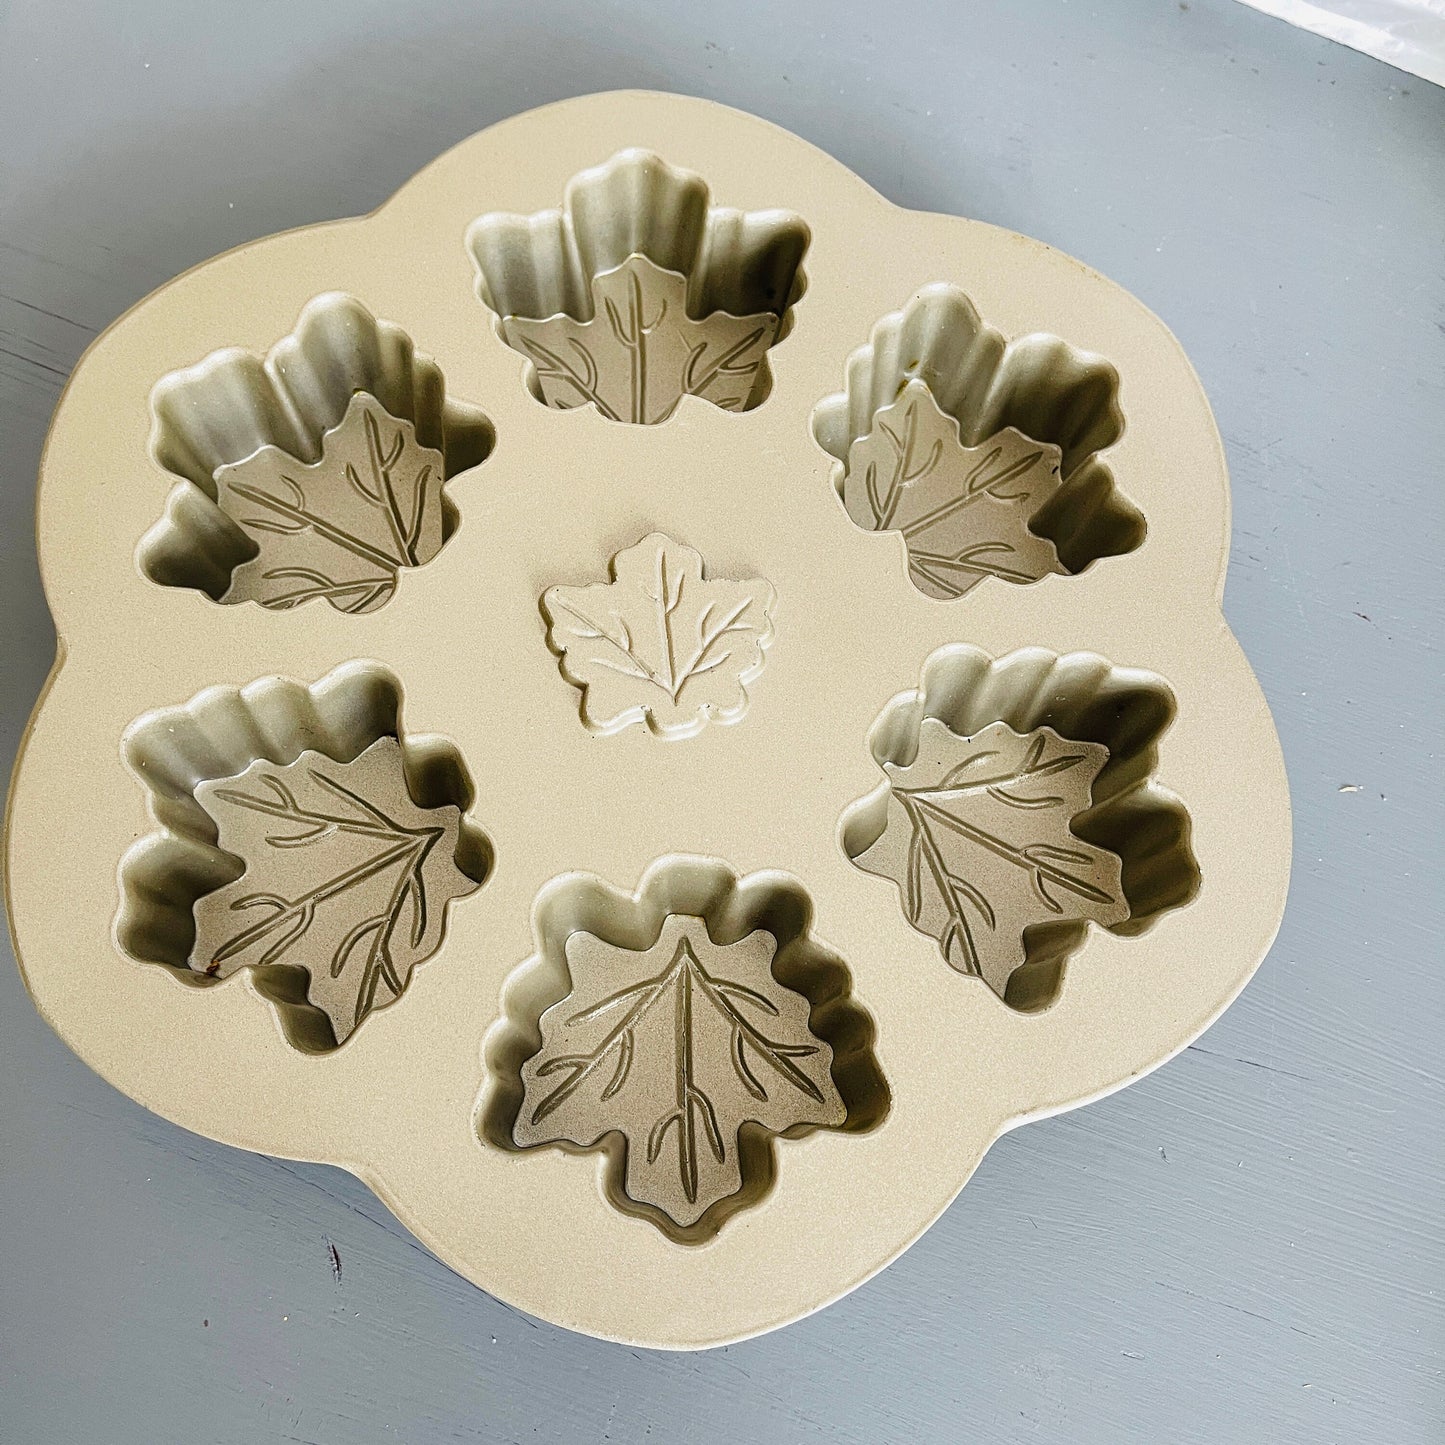 Nordic Ware, Maple Leaf Shaped, Cupcake/Muffin Pan, Aluminum Bakeware